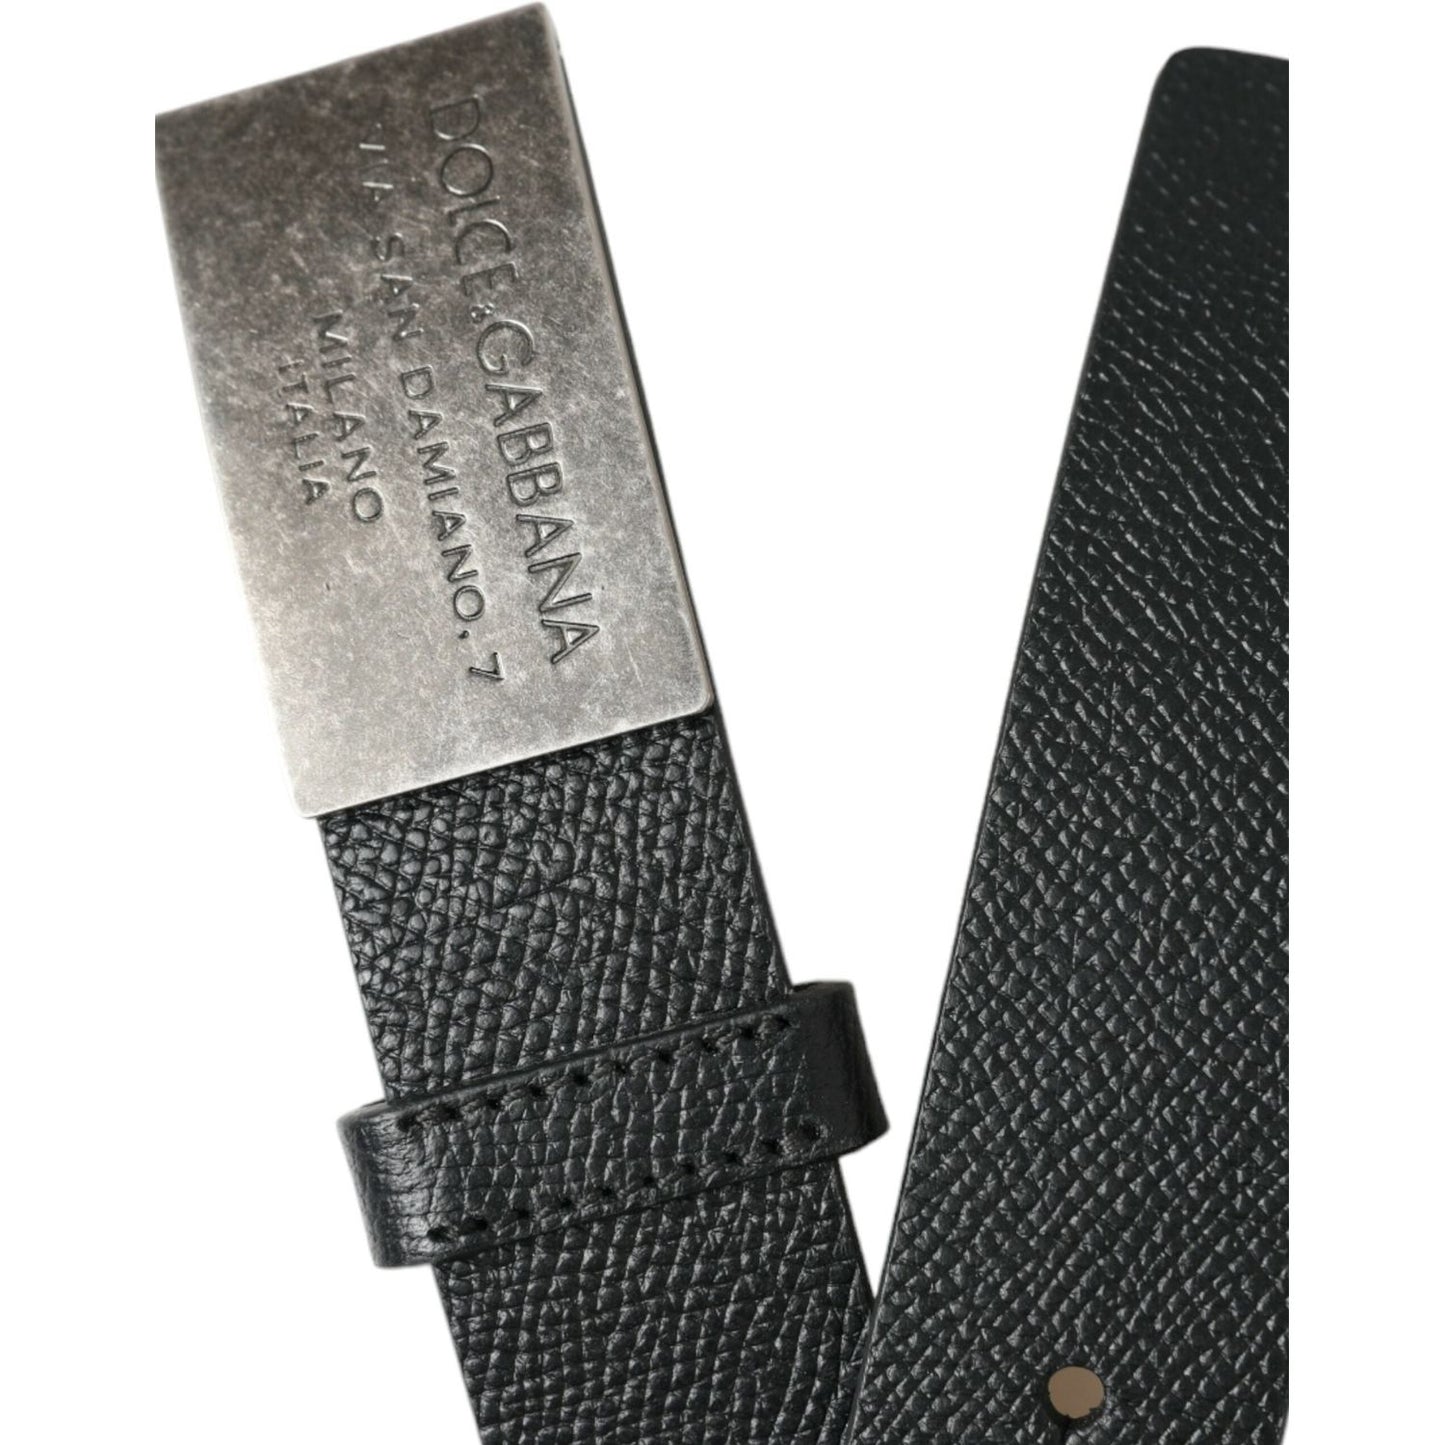 Dolce & Gabbana Elegant Black Leather Belt with Metal Buckle elegant-black-leather-belt-with-metal-buckle-9